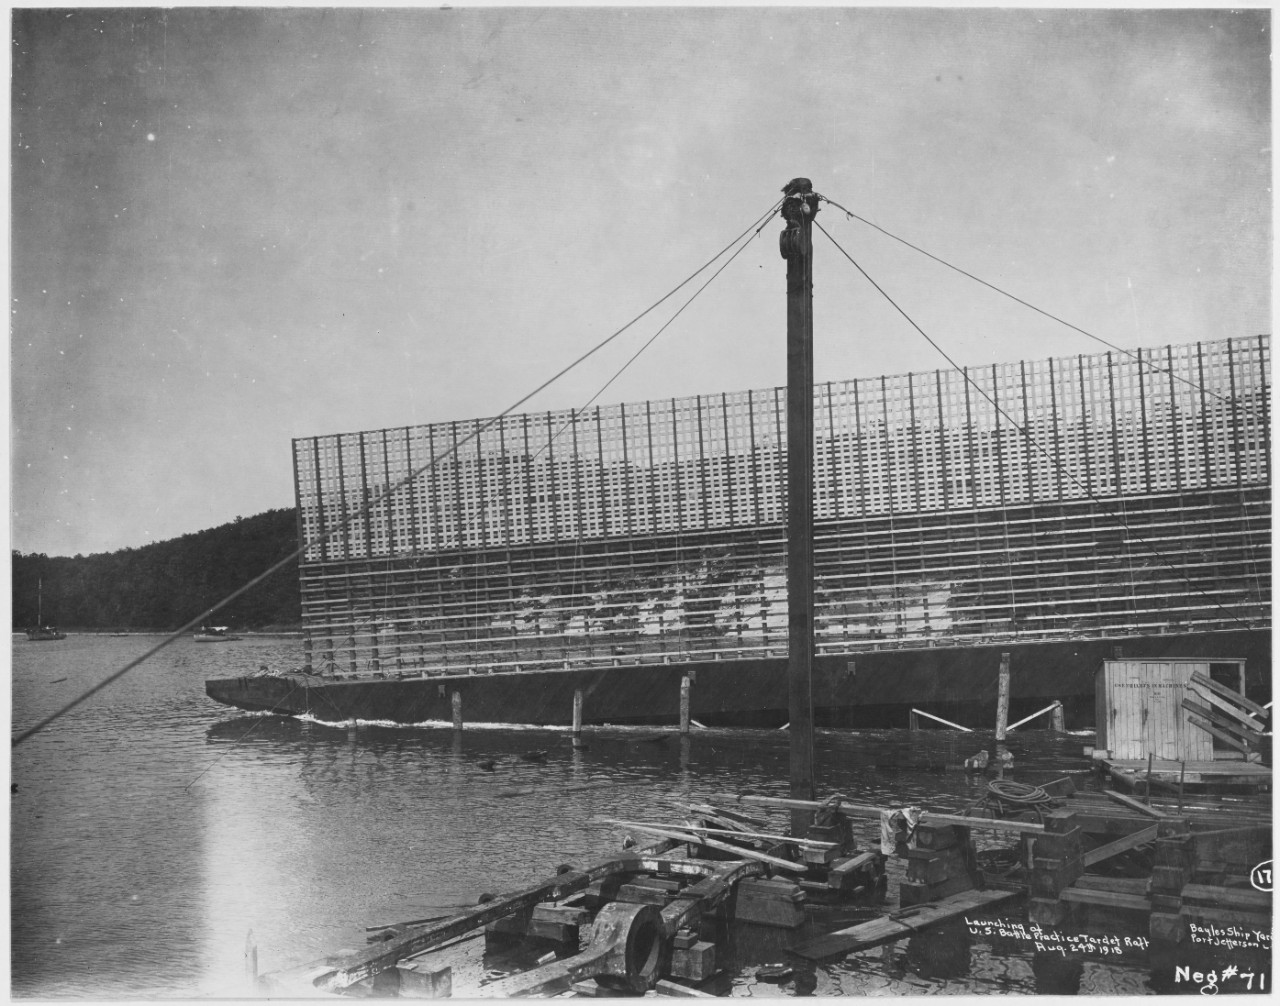 Launching of U.S. Battle Practice Target Raft #58. Bayles Ship Yard Inc., Port Jefferson, Long Island, New York. Neg. #71. 8/24/1918